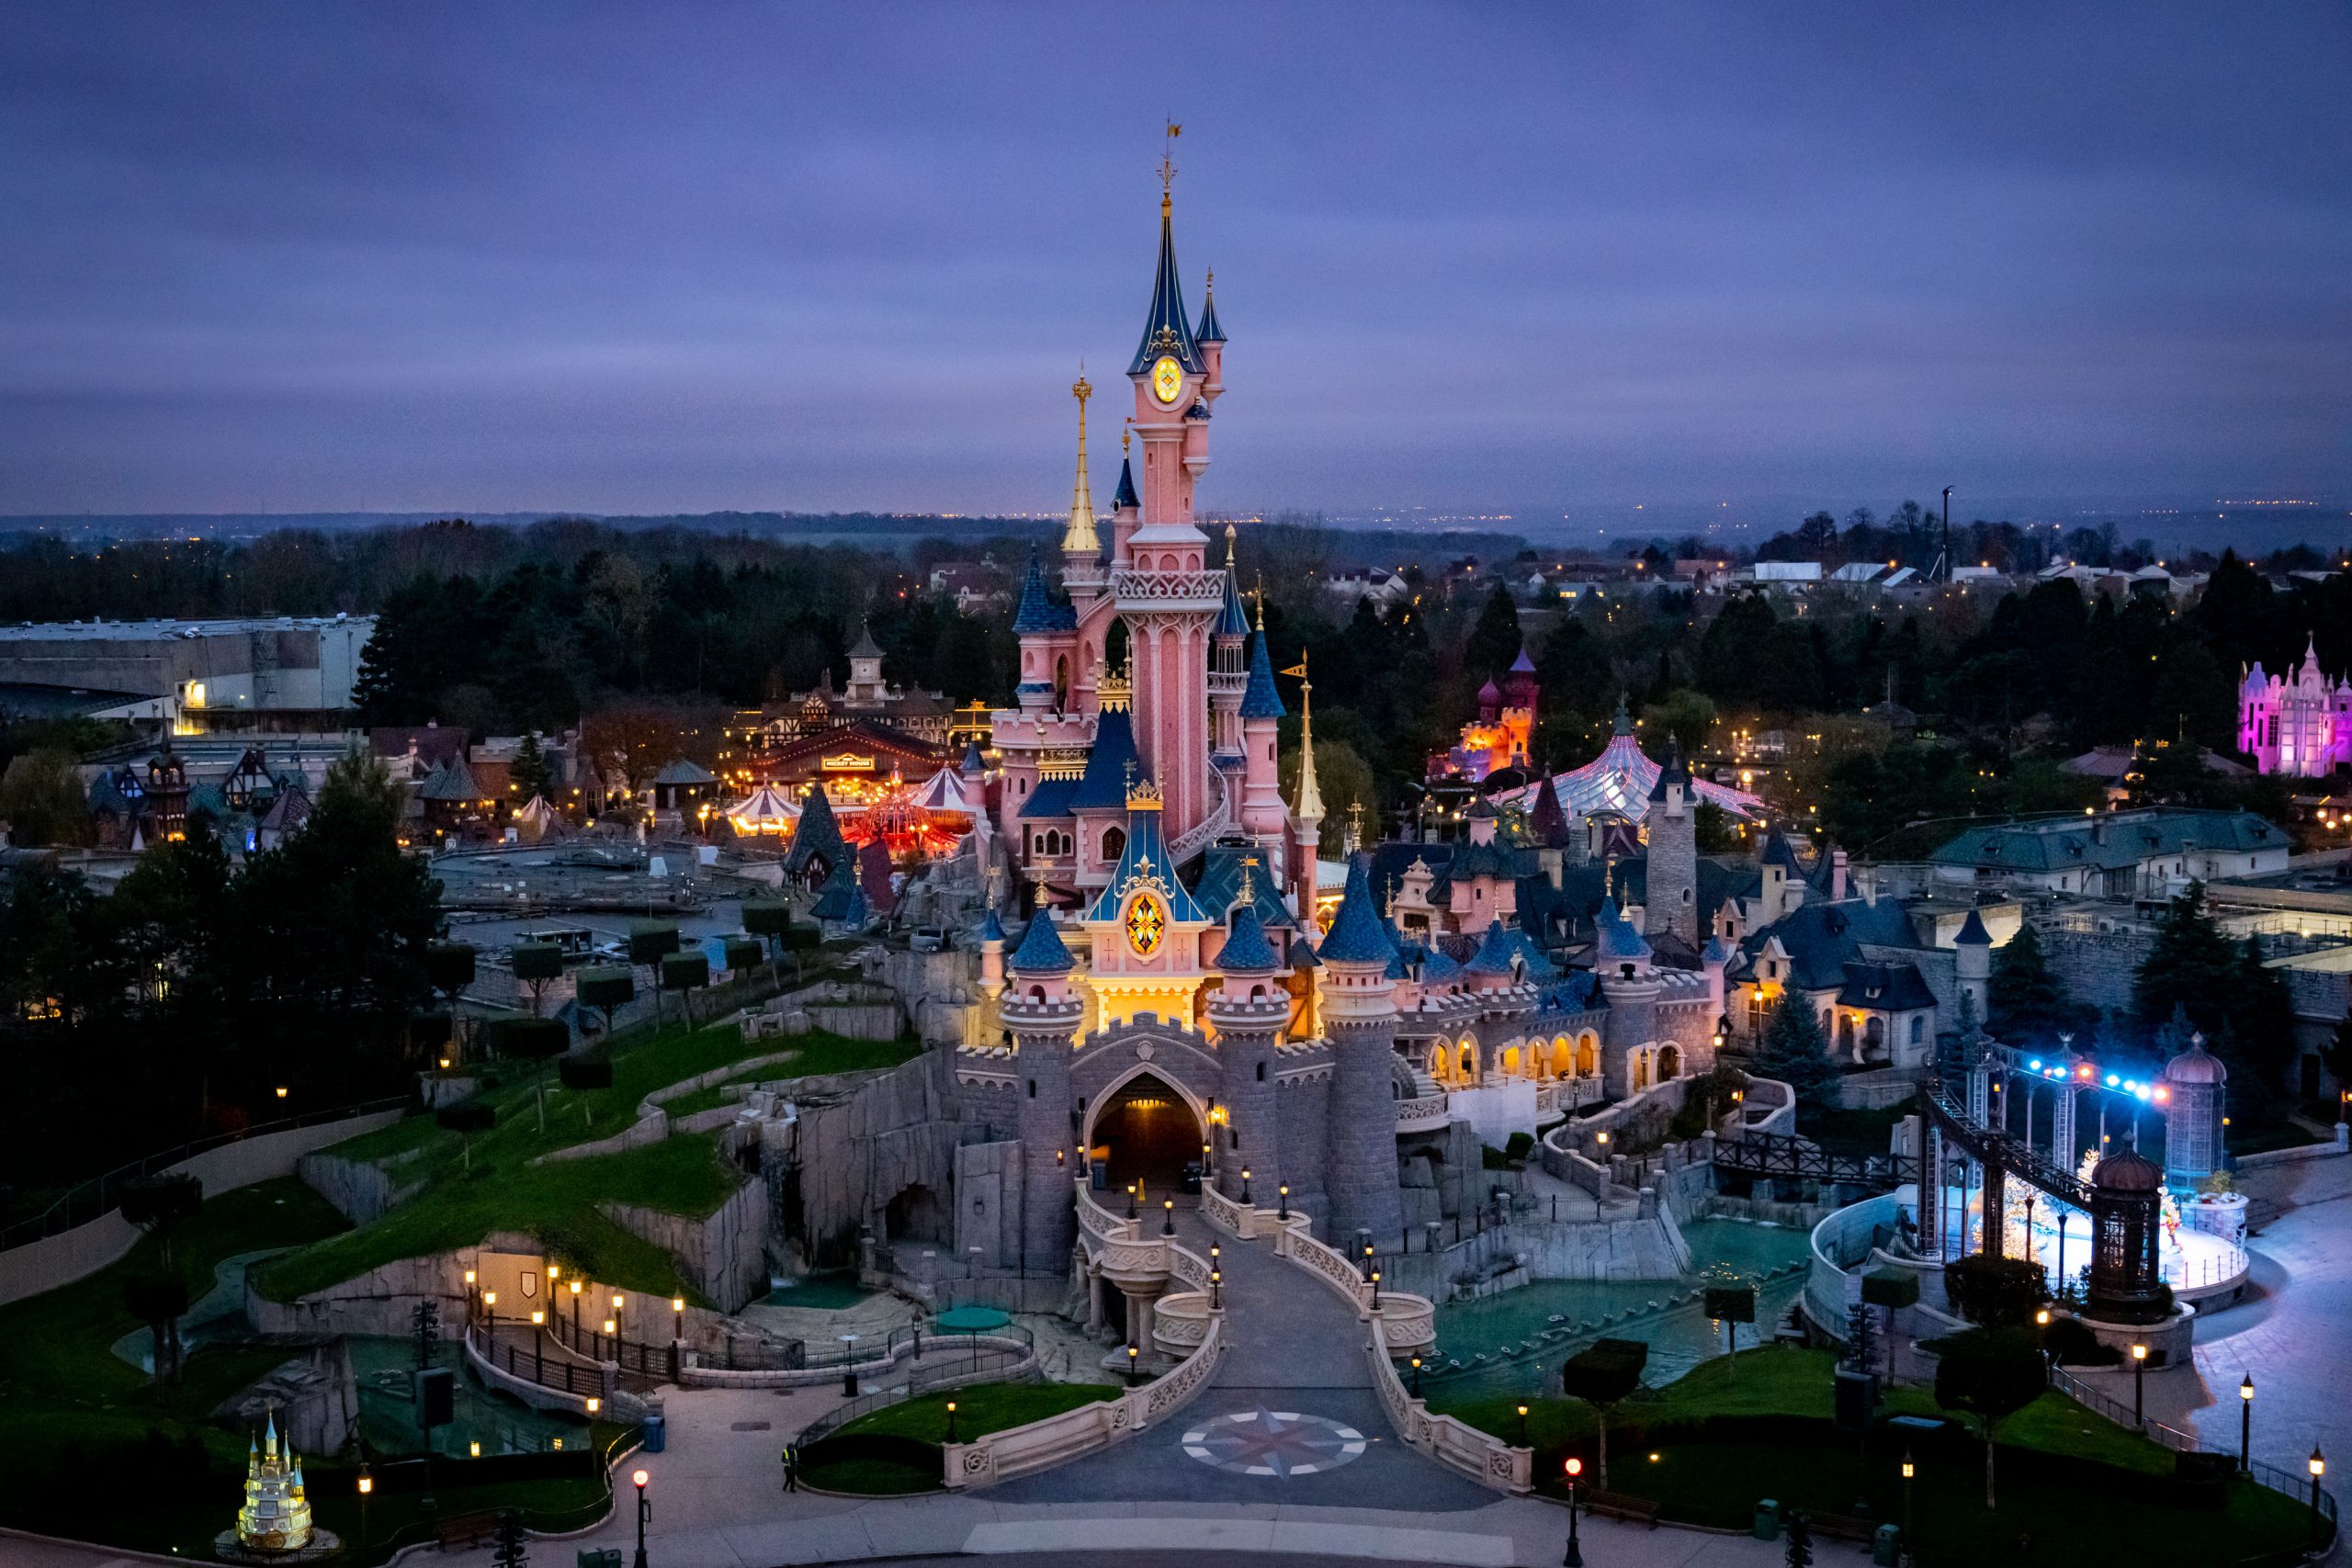 Sleeping Beauty Castle Awakens in Stunning Fashion After a 12-Month Massive Refurbishment at Disneyland Paris